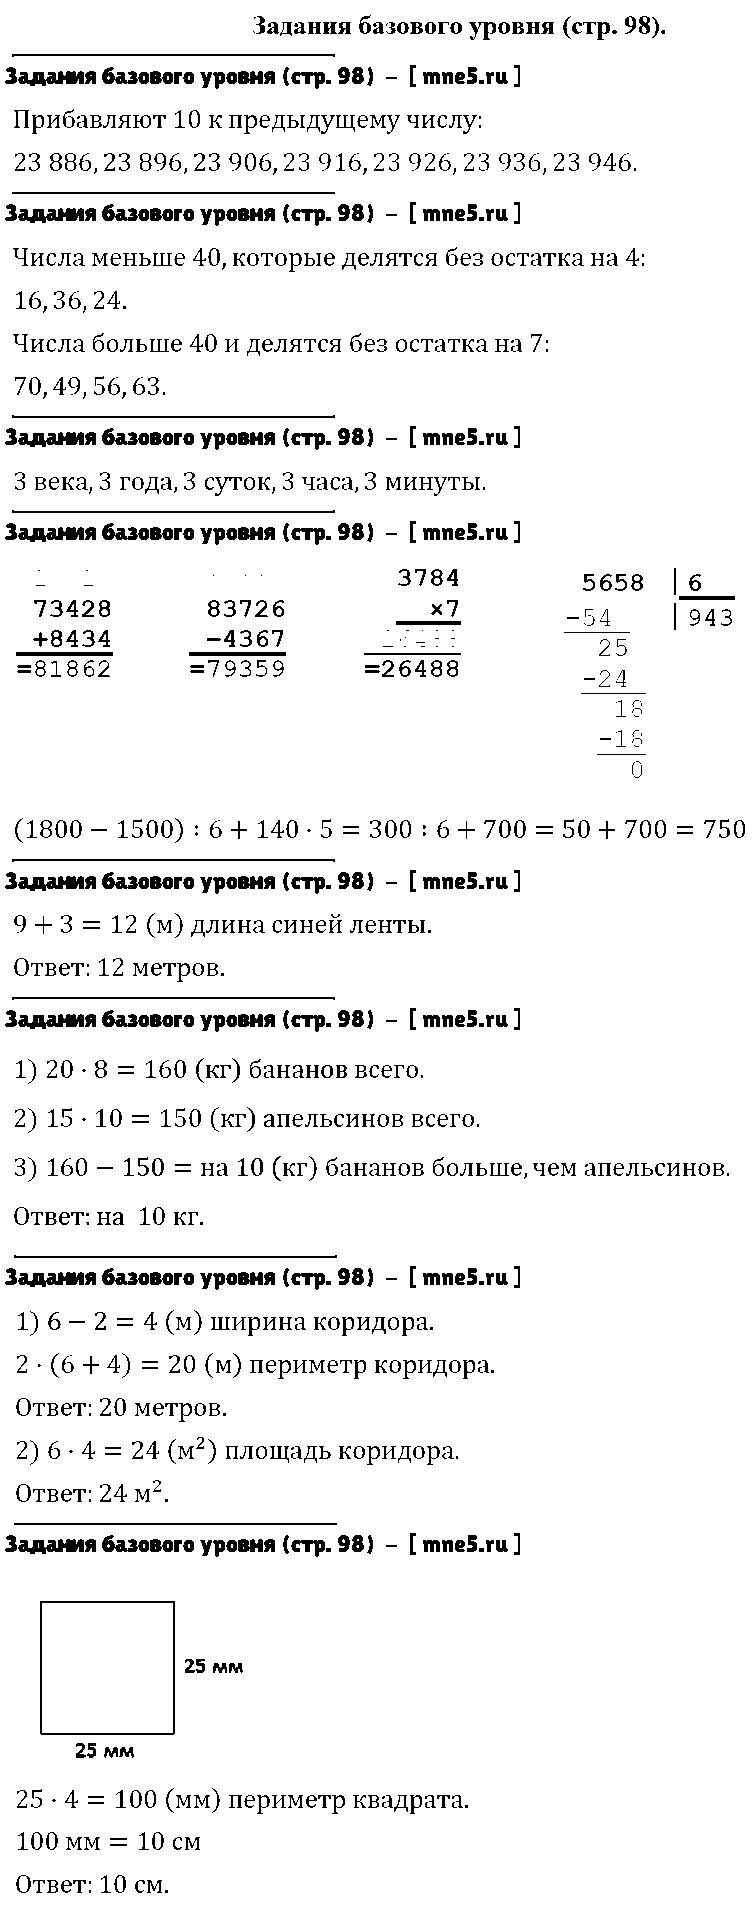 ГДЗ Математика 4 класс - Задания базового уровня (стр. 98)